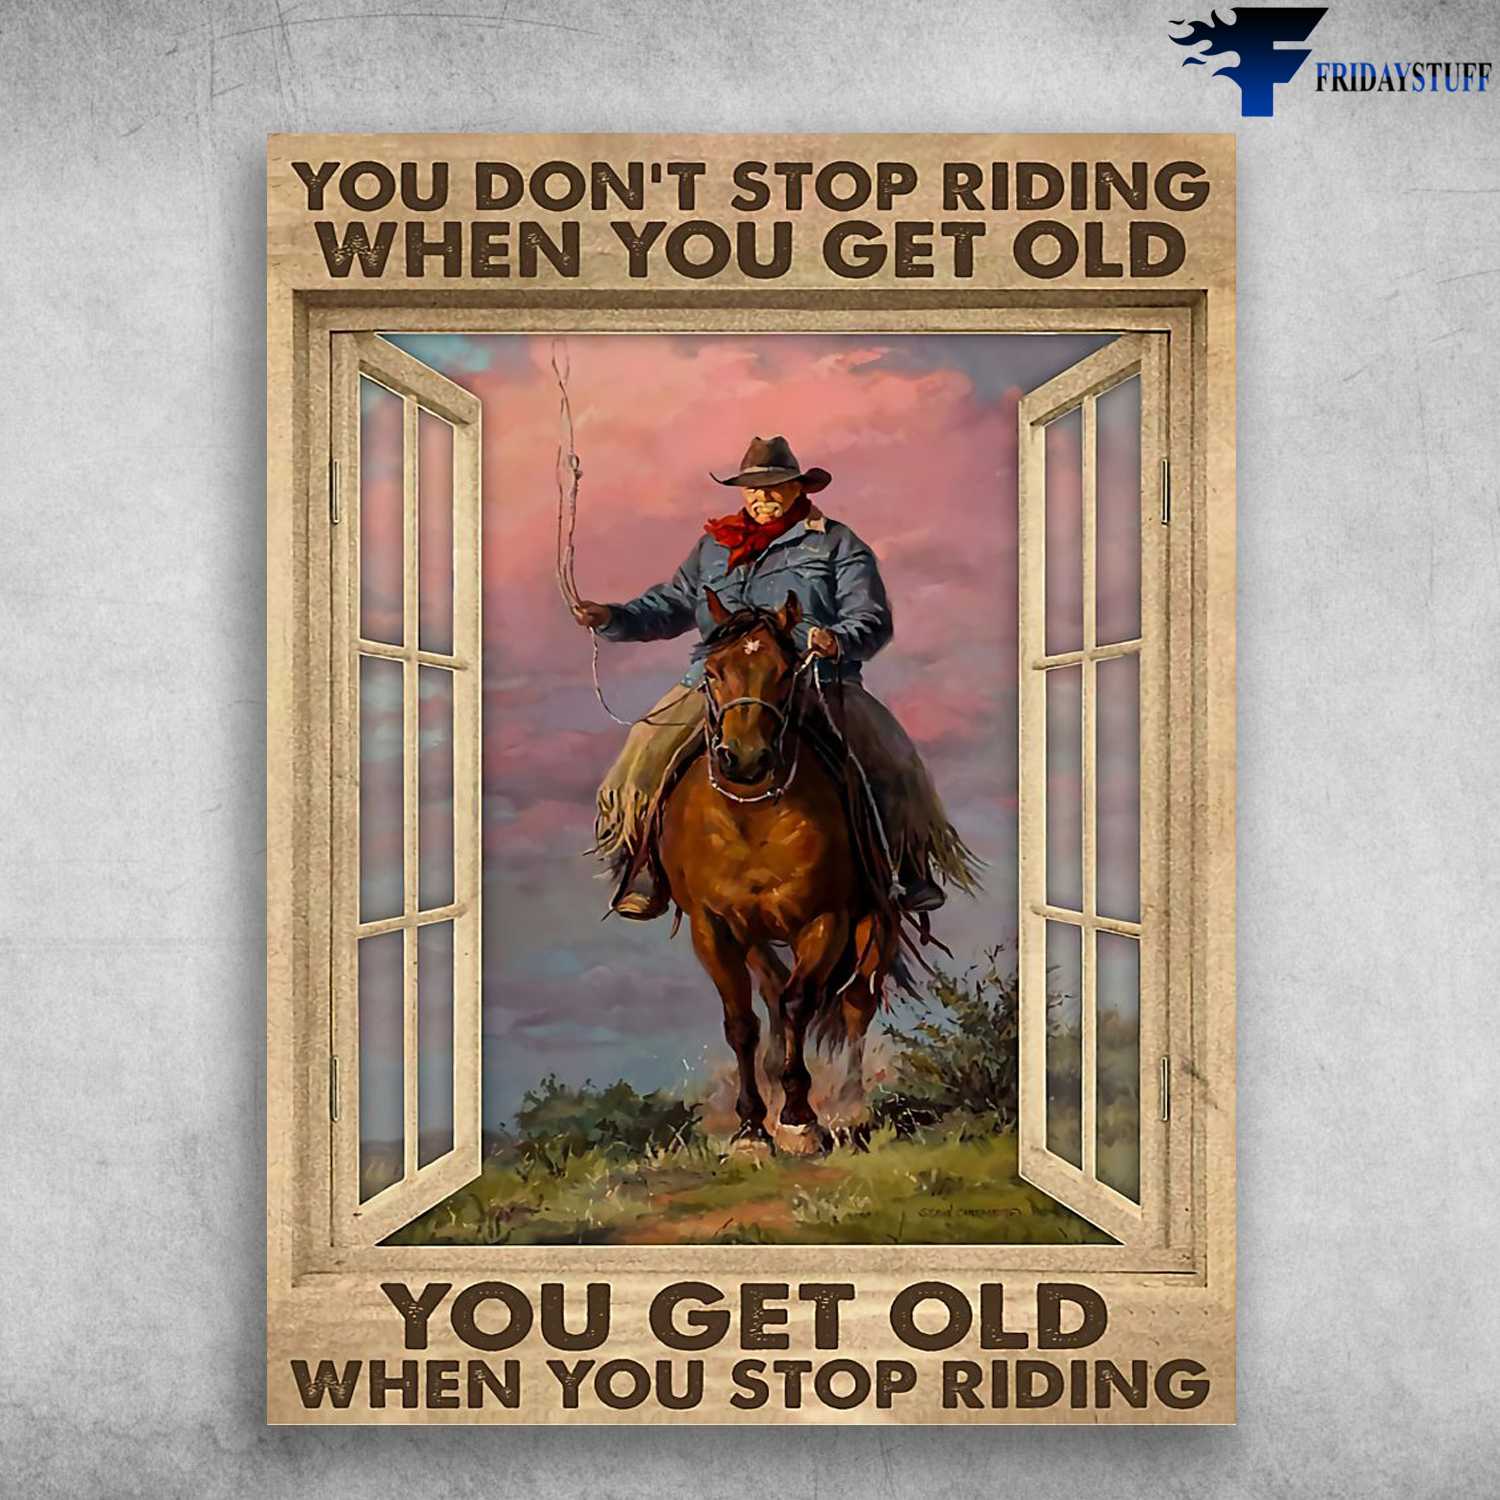 Old Cowboy Riding, Horse Riding - You Don't Stop Riding When You Get Old, You Get Old When You Stop Riding